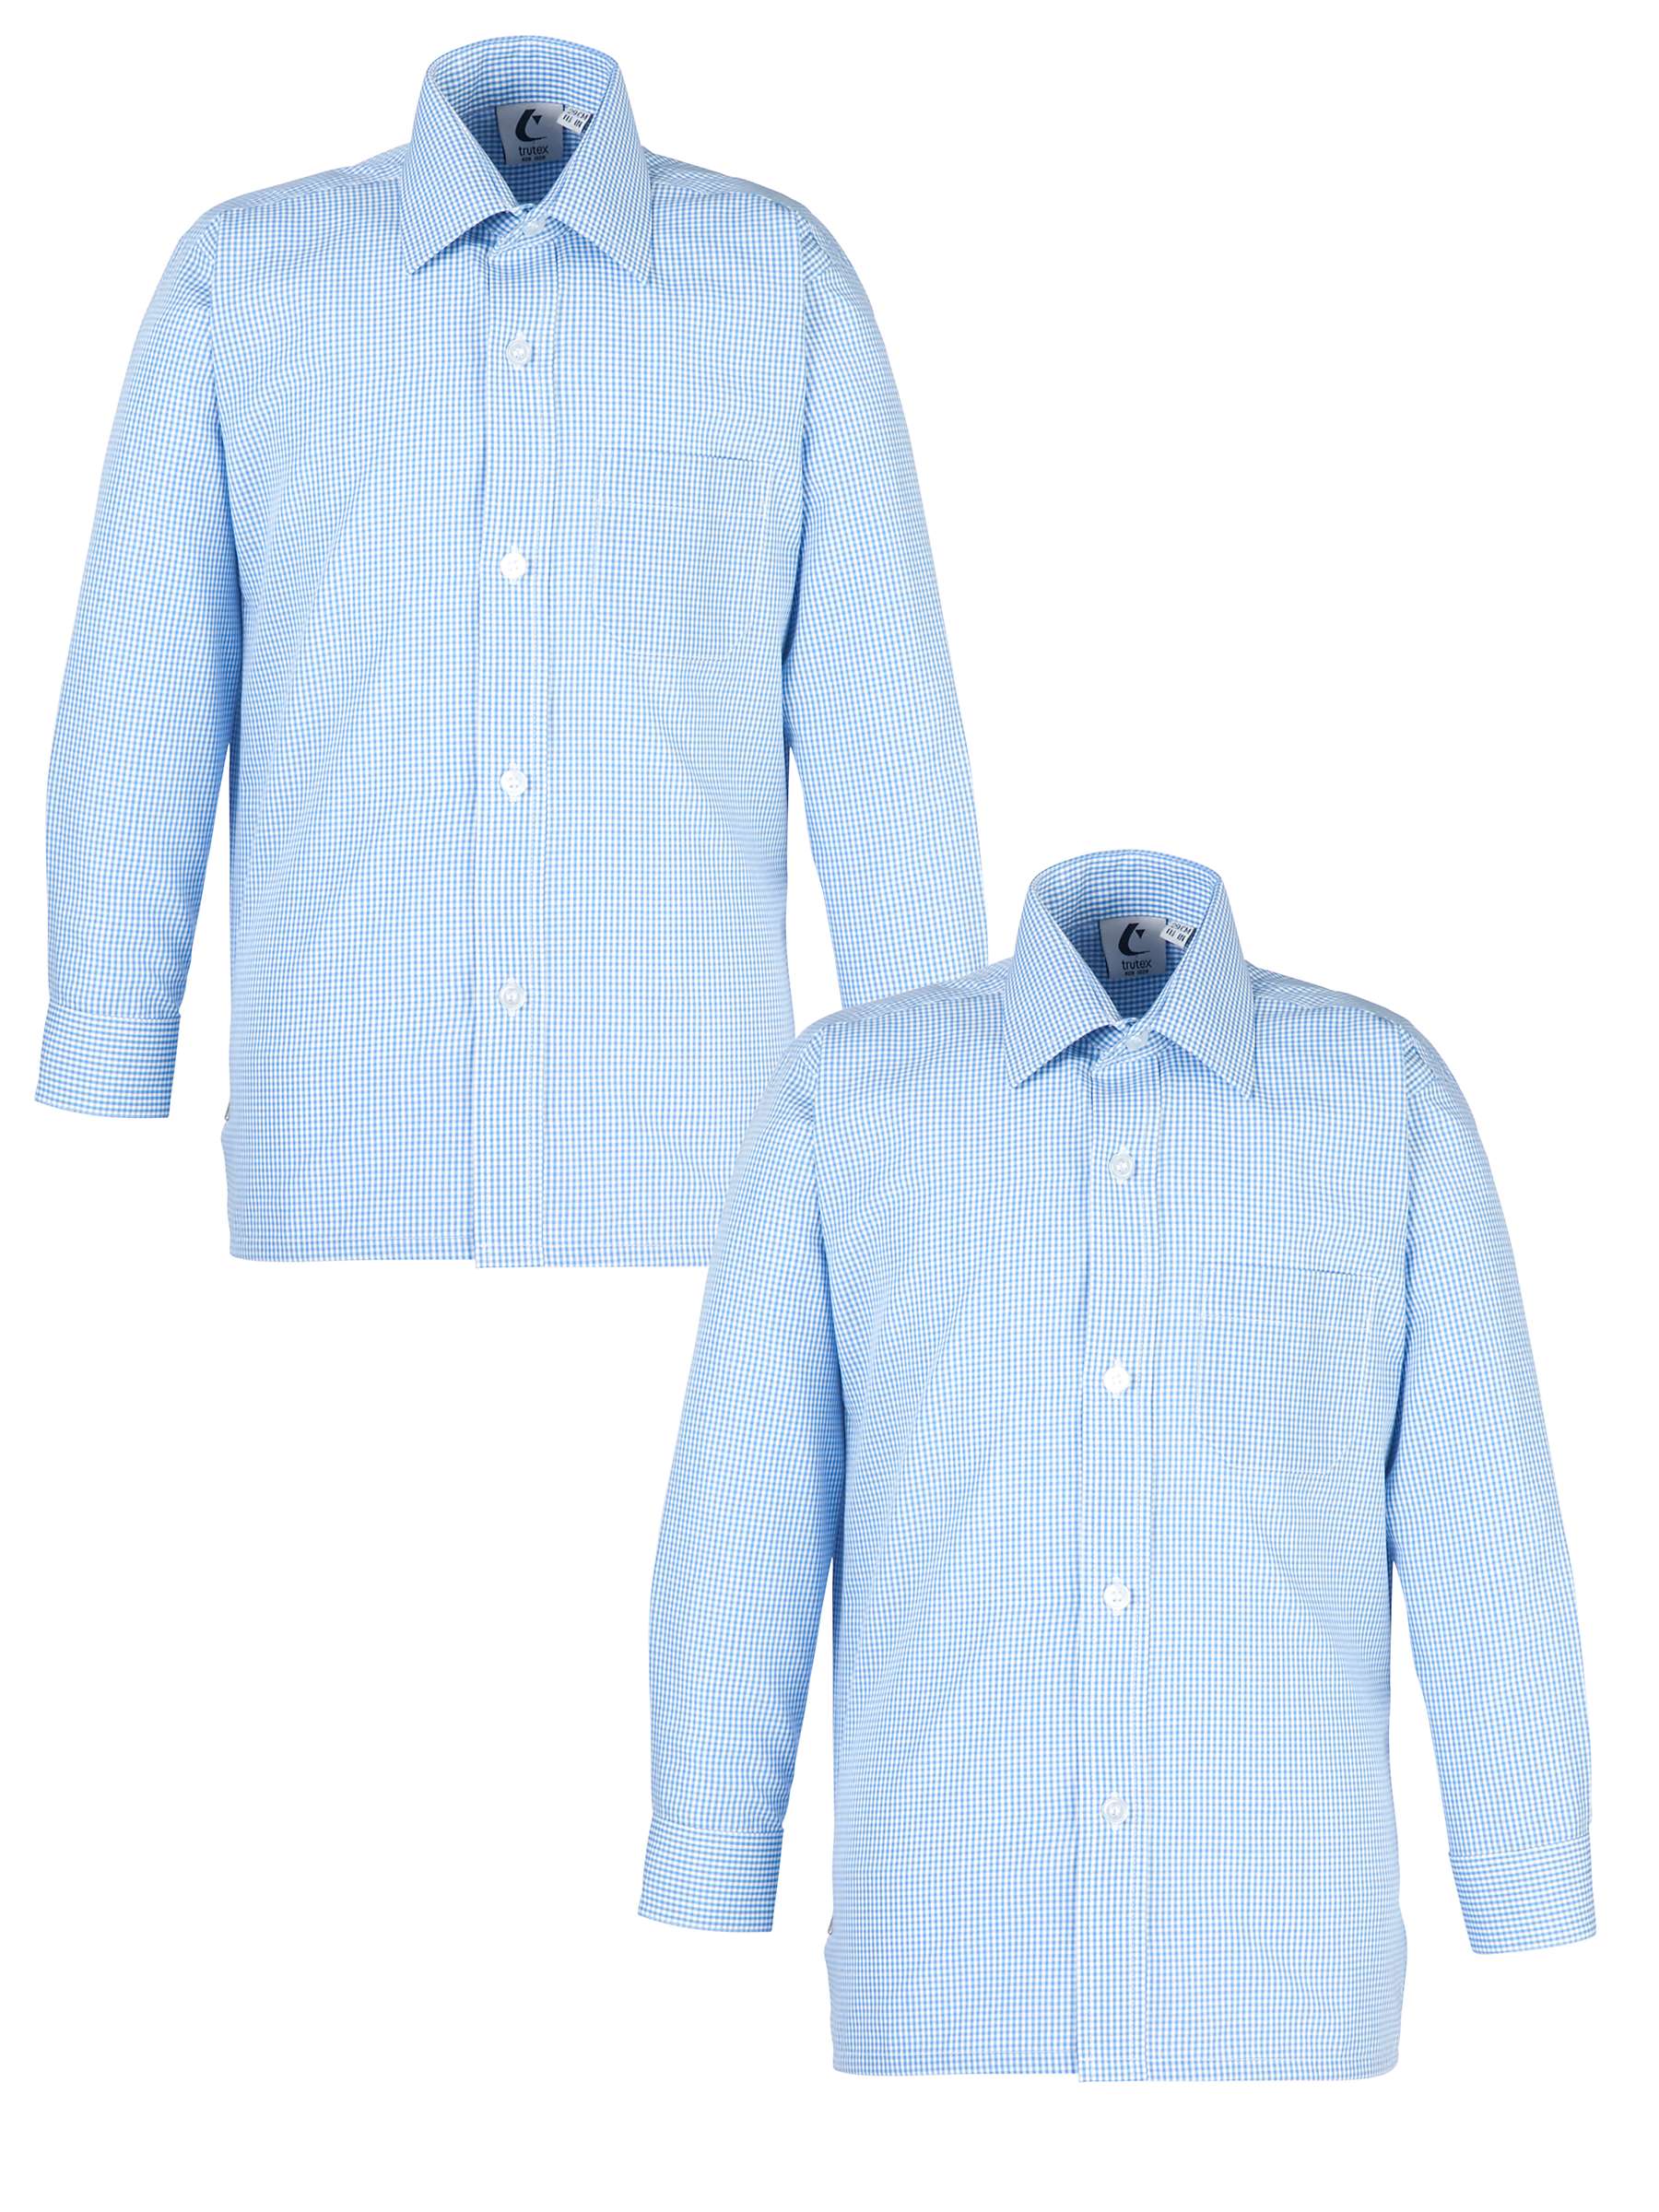 Buy Boys' School Check Print Long Sleeved Shirt, Pack of 2, Blue/White Online at johnlewis.com